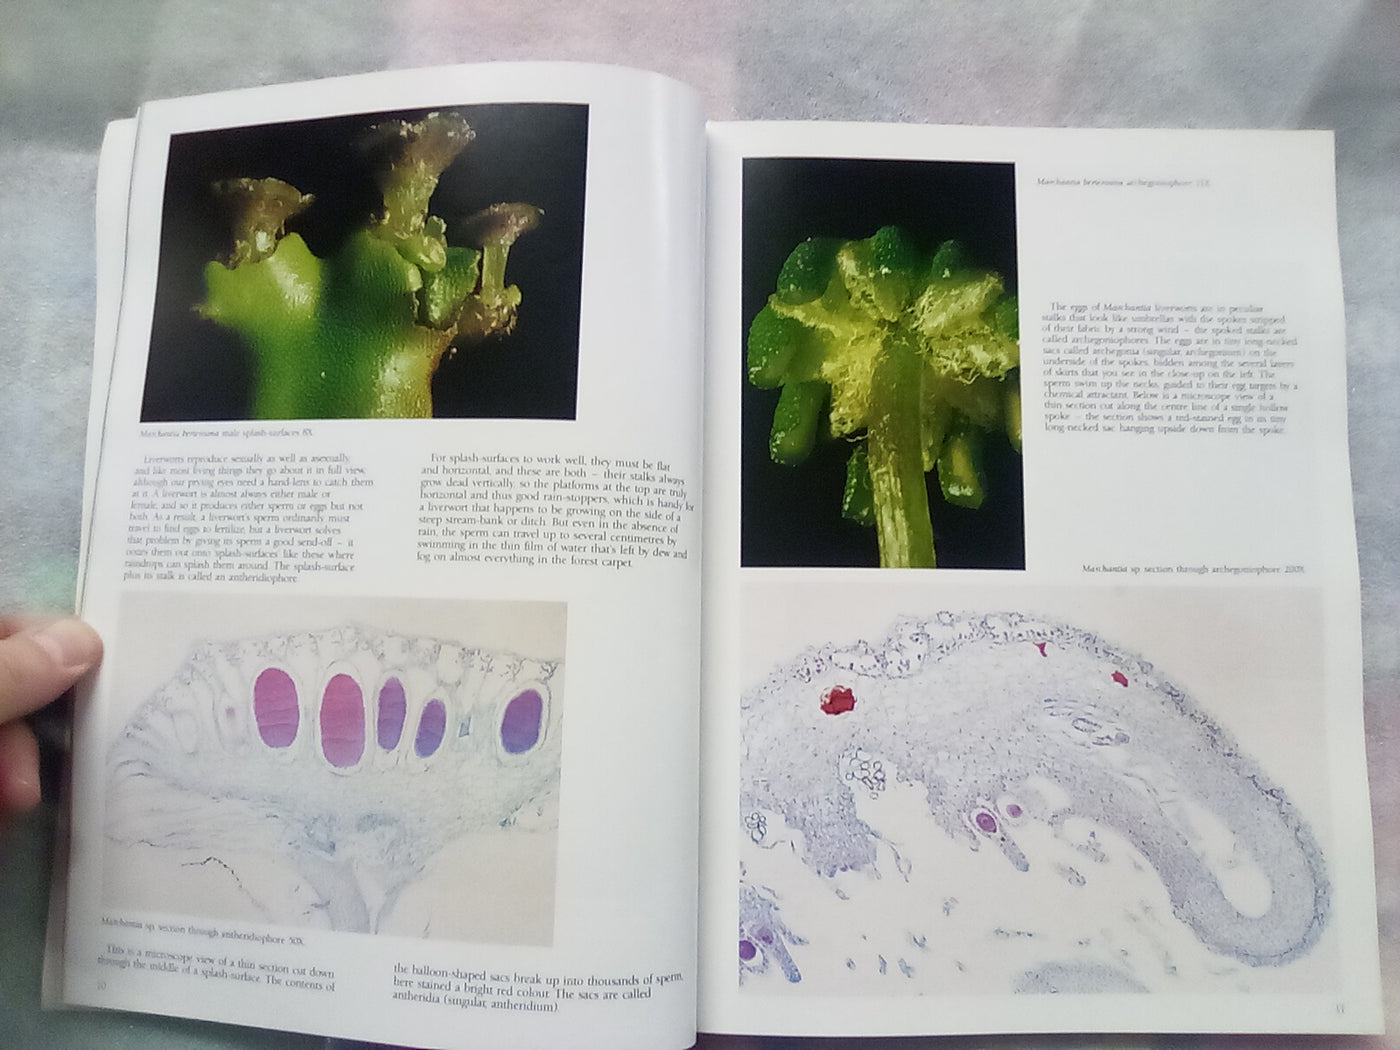 The Forest Carpet - NZs Mosses, Lichens, Liverworts, etc... by Bill & Nancy Malcom